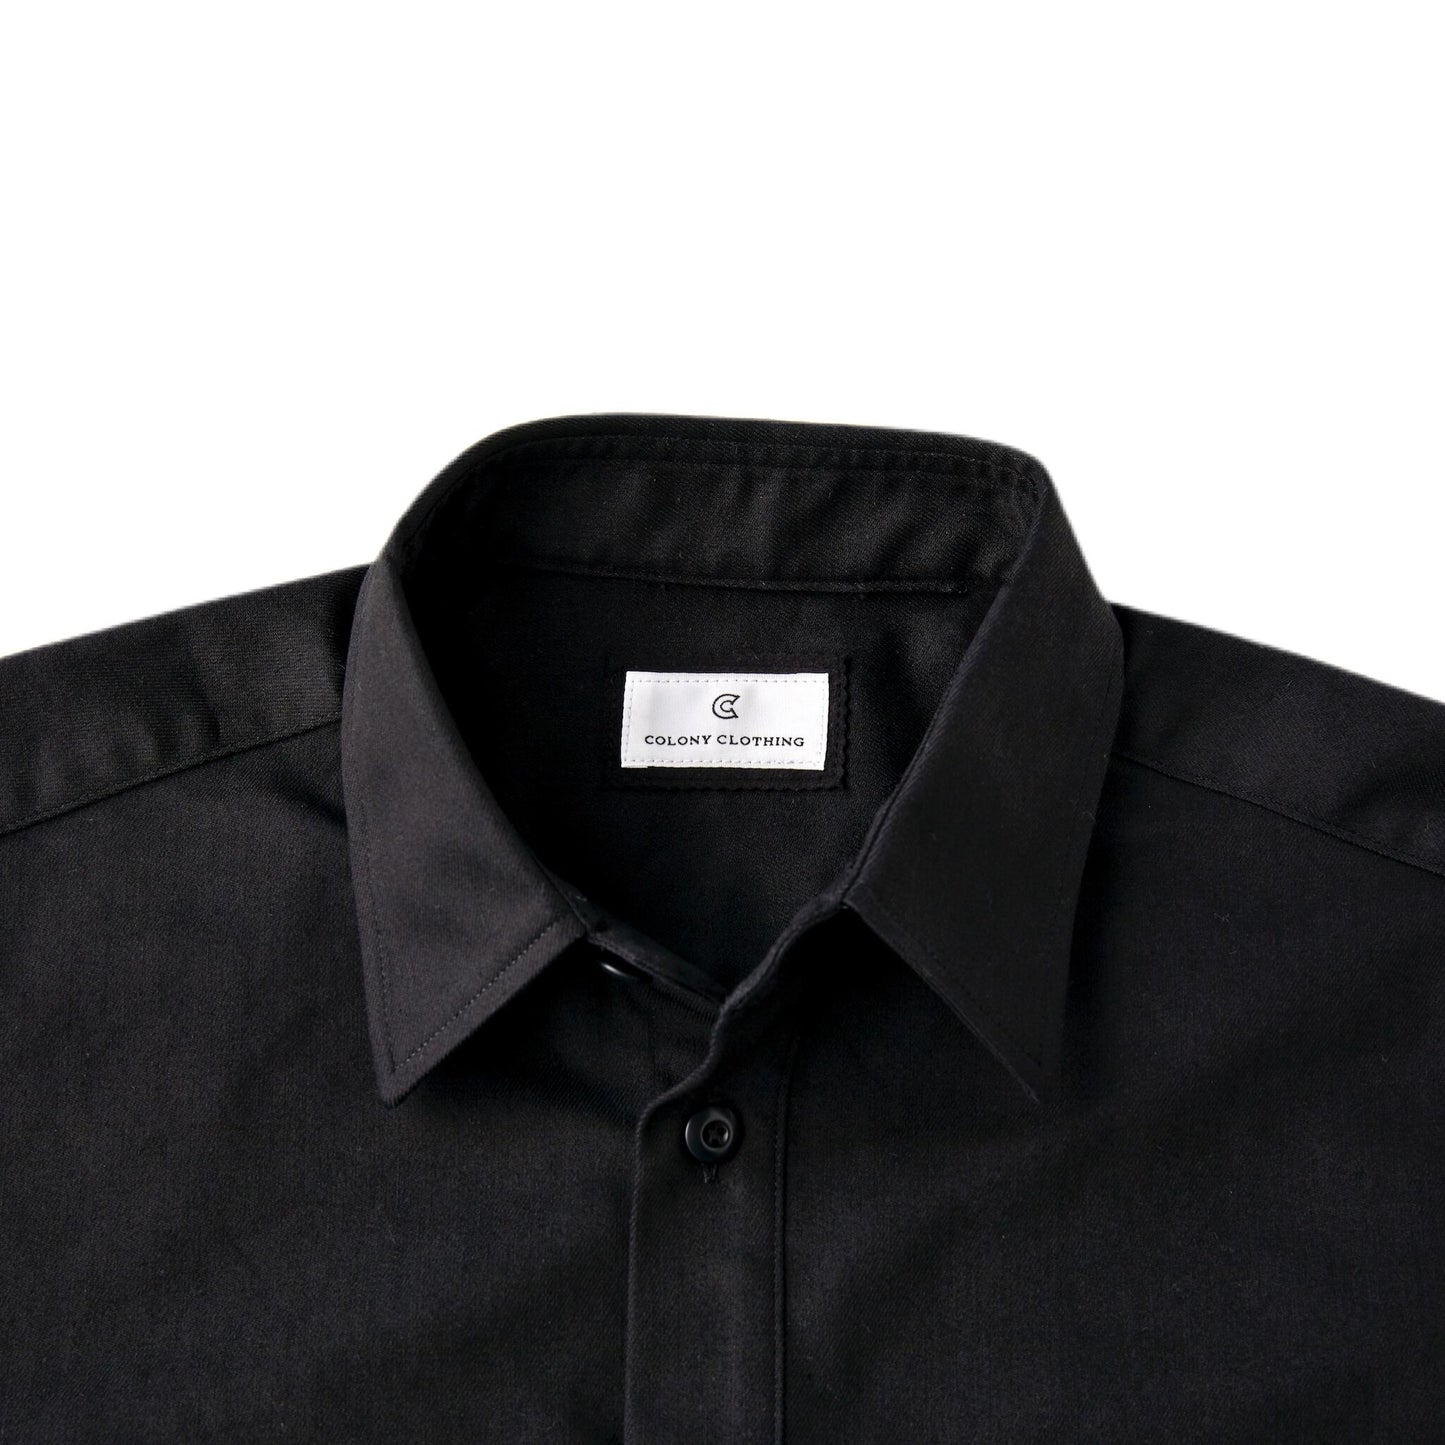 COLONY CLOTHING / EXPEDITION LONG SLEEVE SHIRT BLACK DENIM / CC2102-SJ01-03